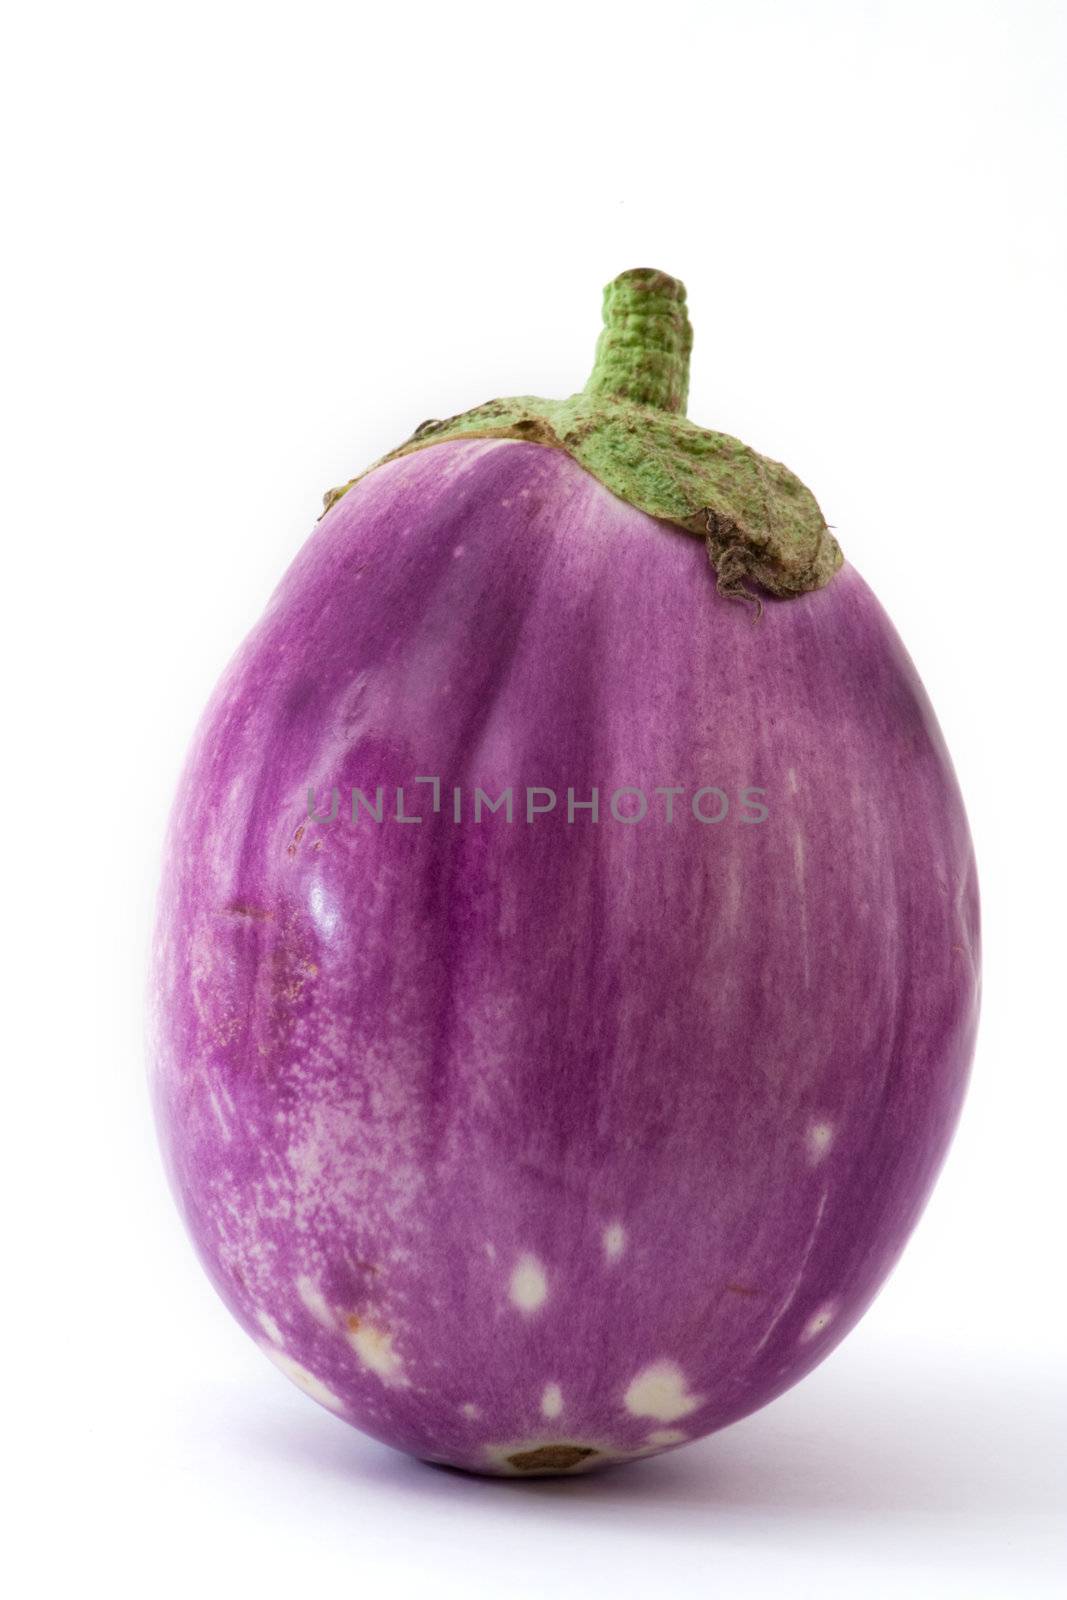 bright purple eggplant on a white background